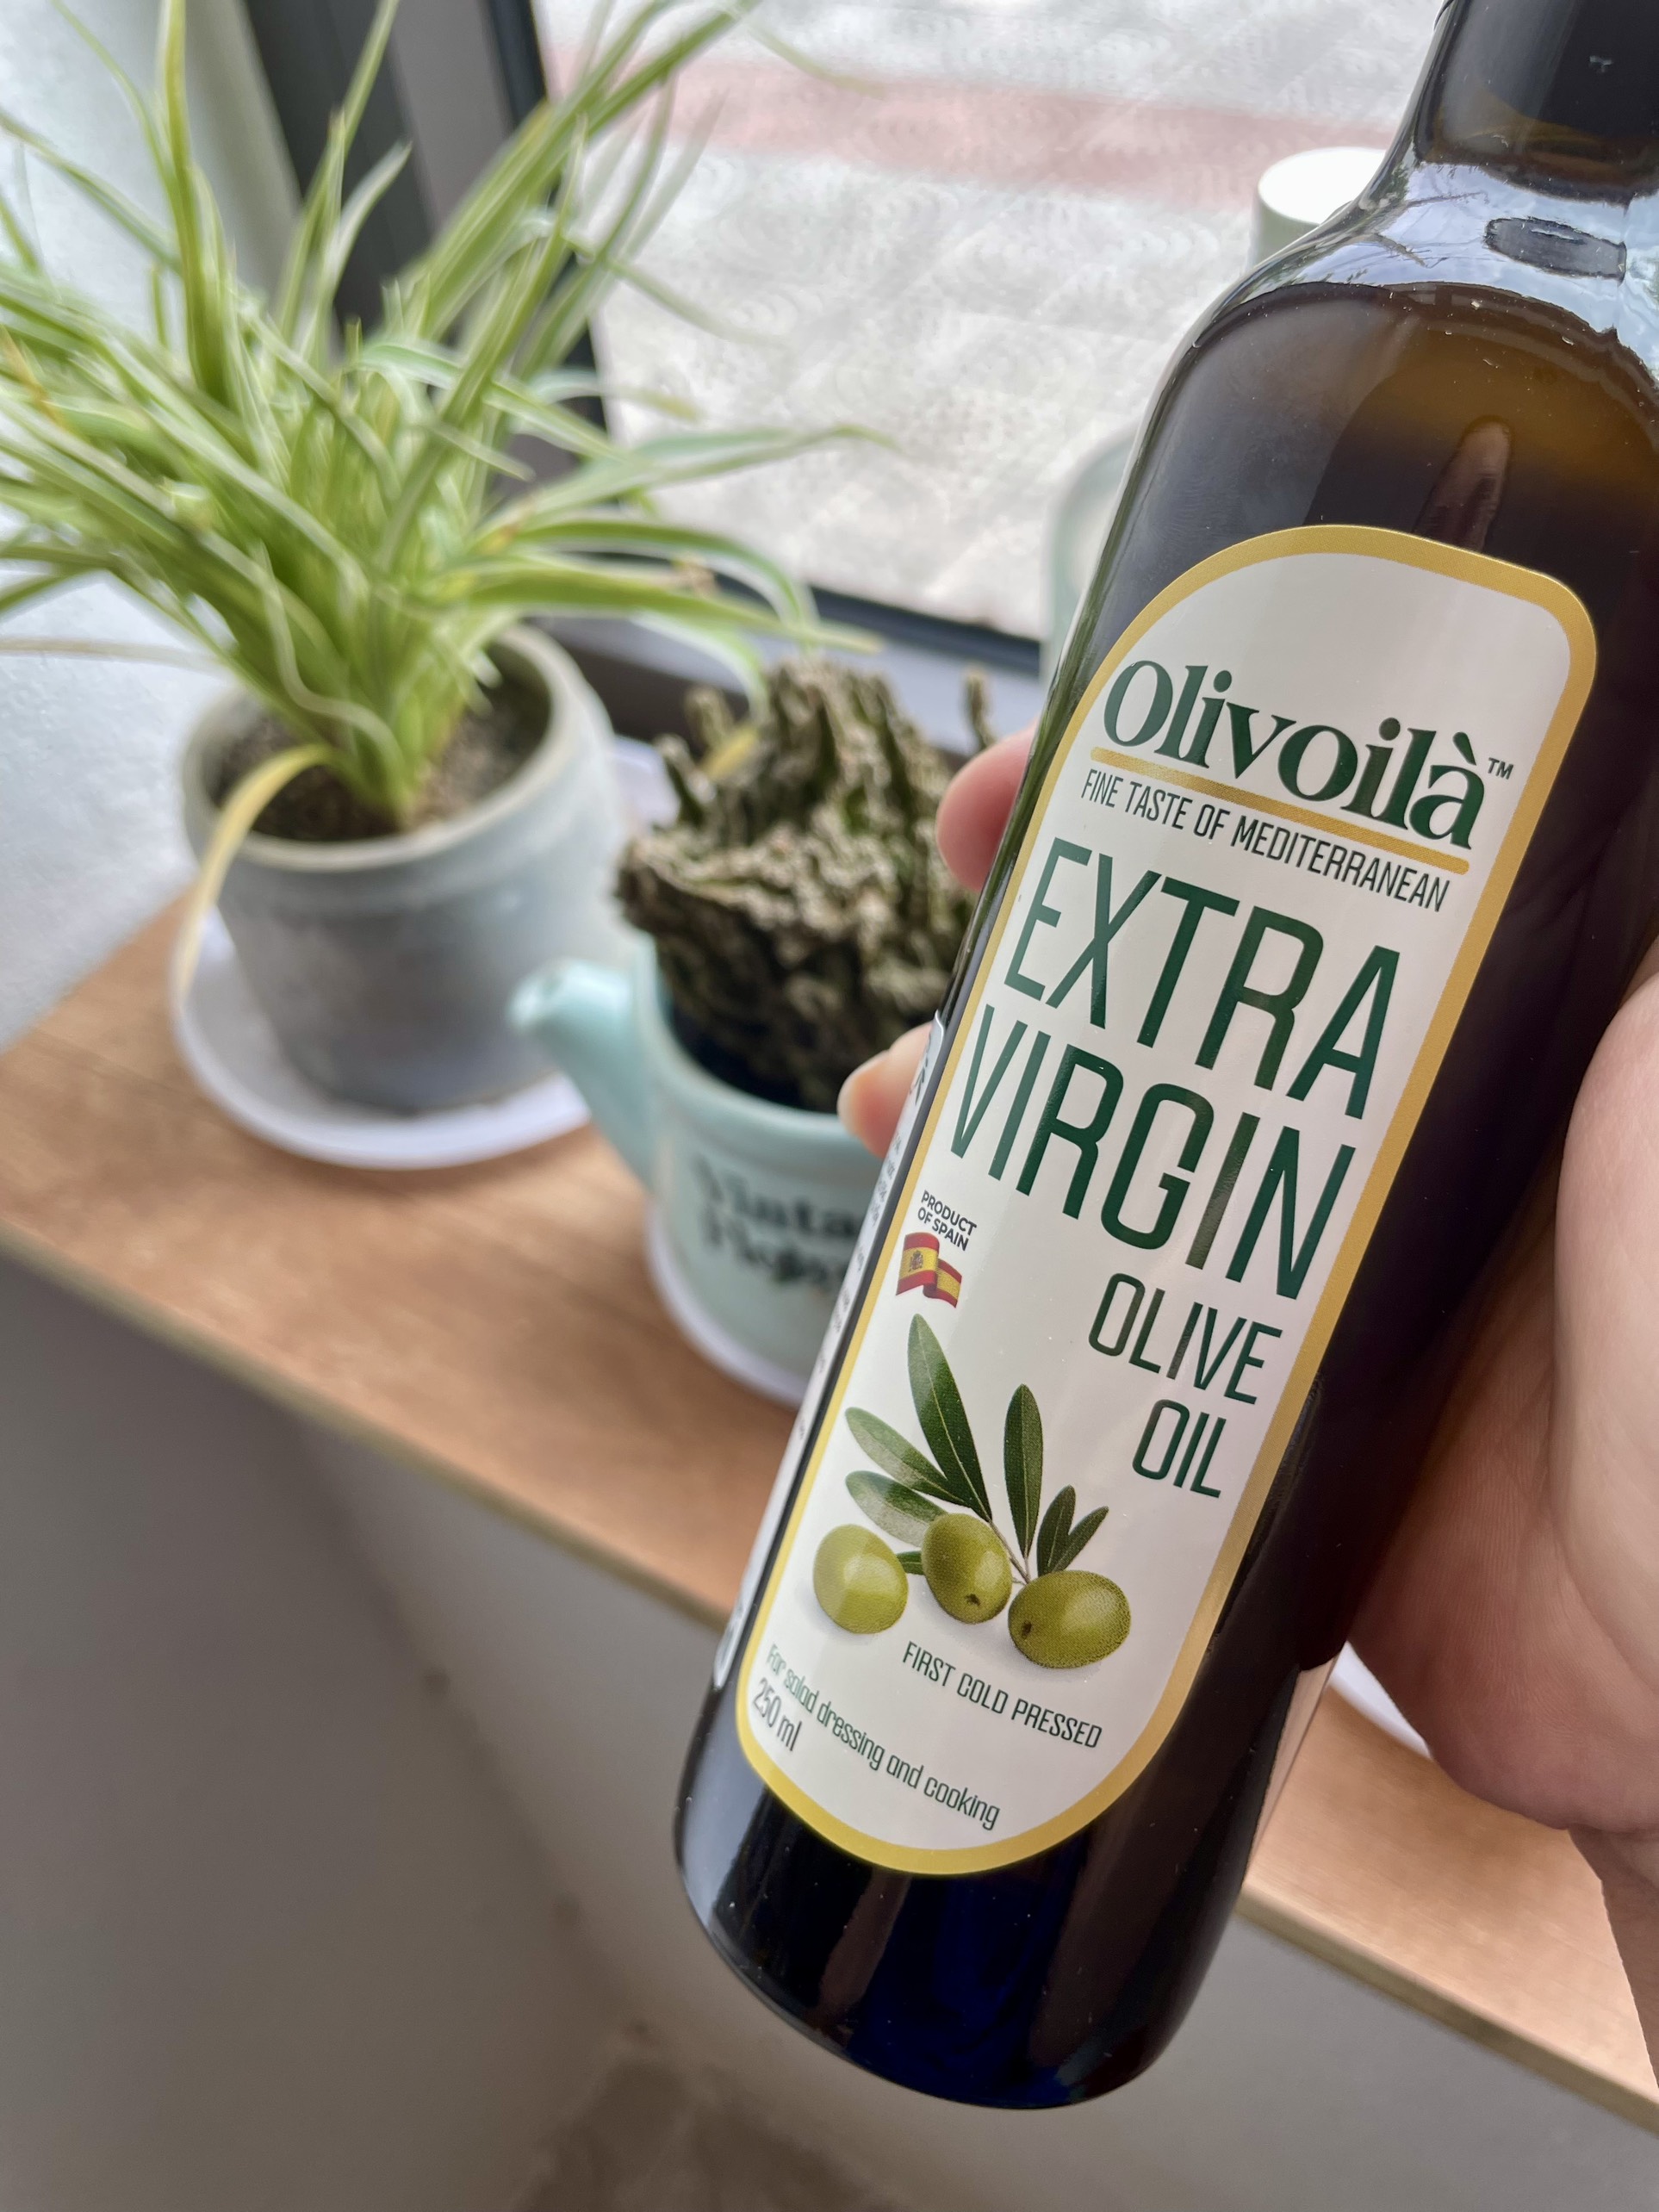 Pure olive oil, Olivoila Extra Virgin brand, genuine imported